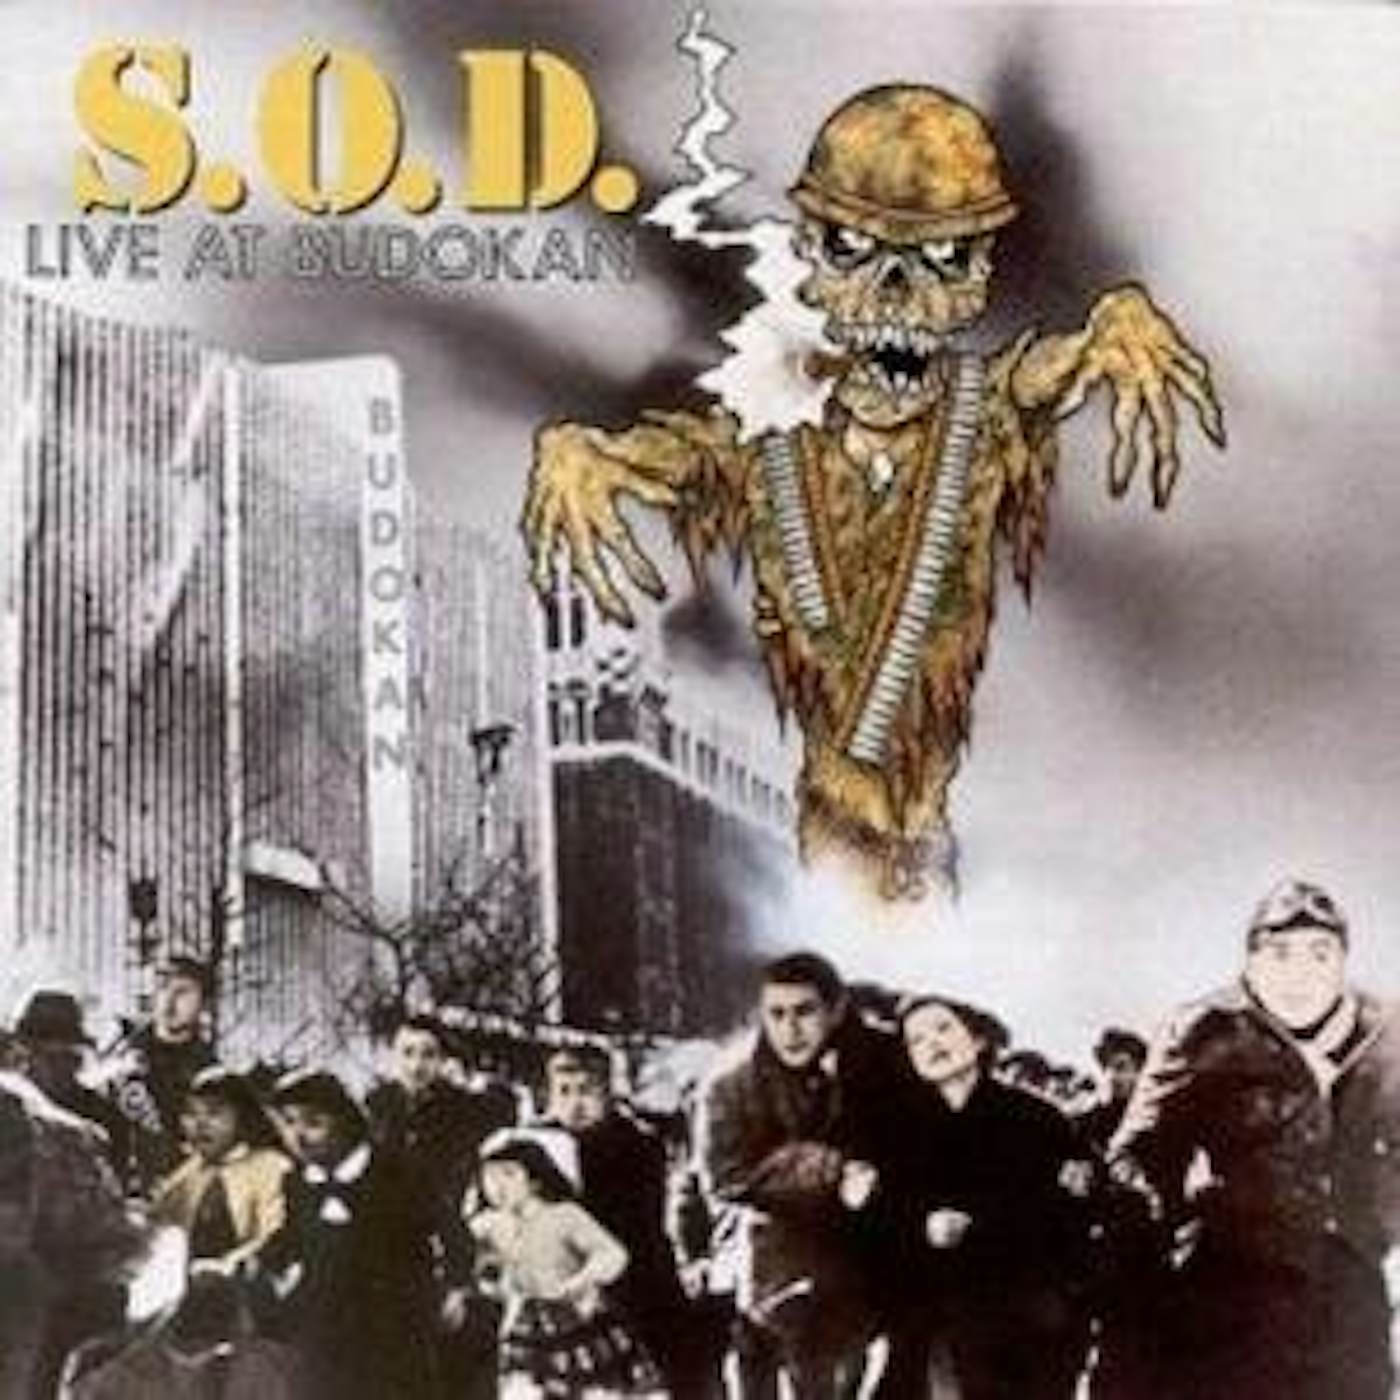 S.O.D. LIVE AT BUDOKAN Vinyl Record - UK Release